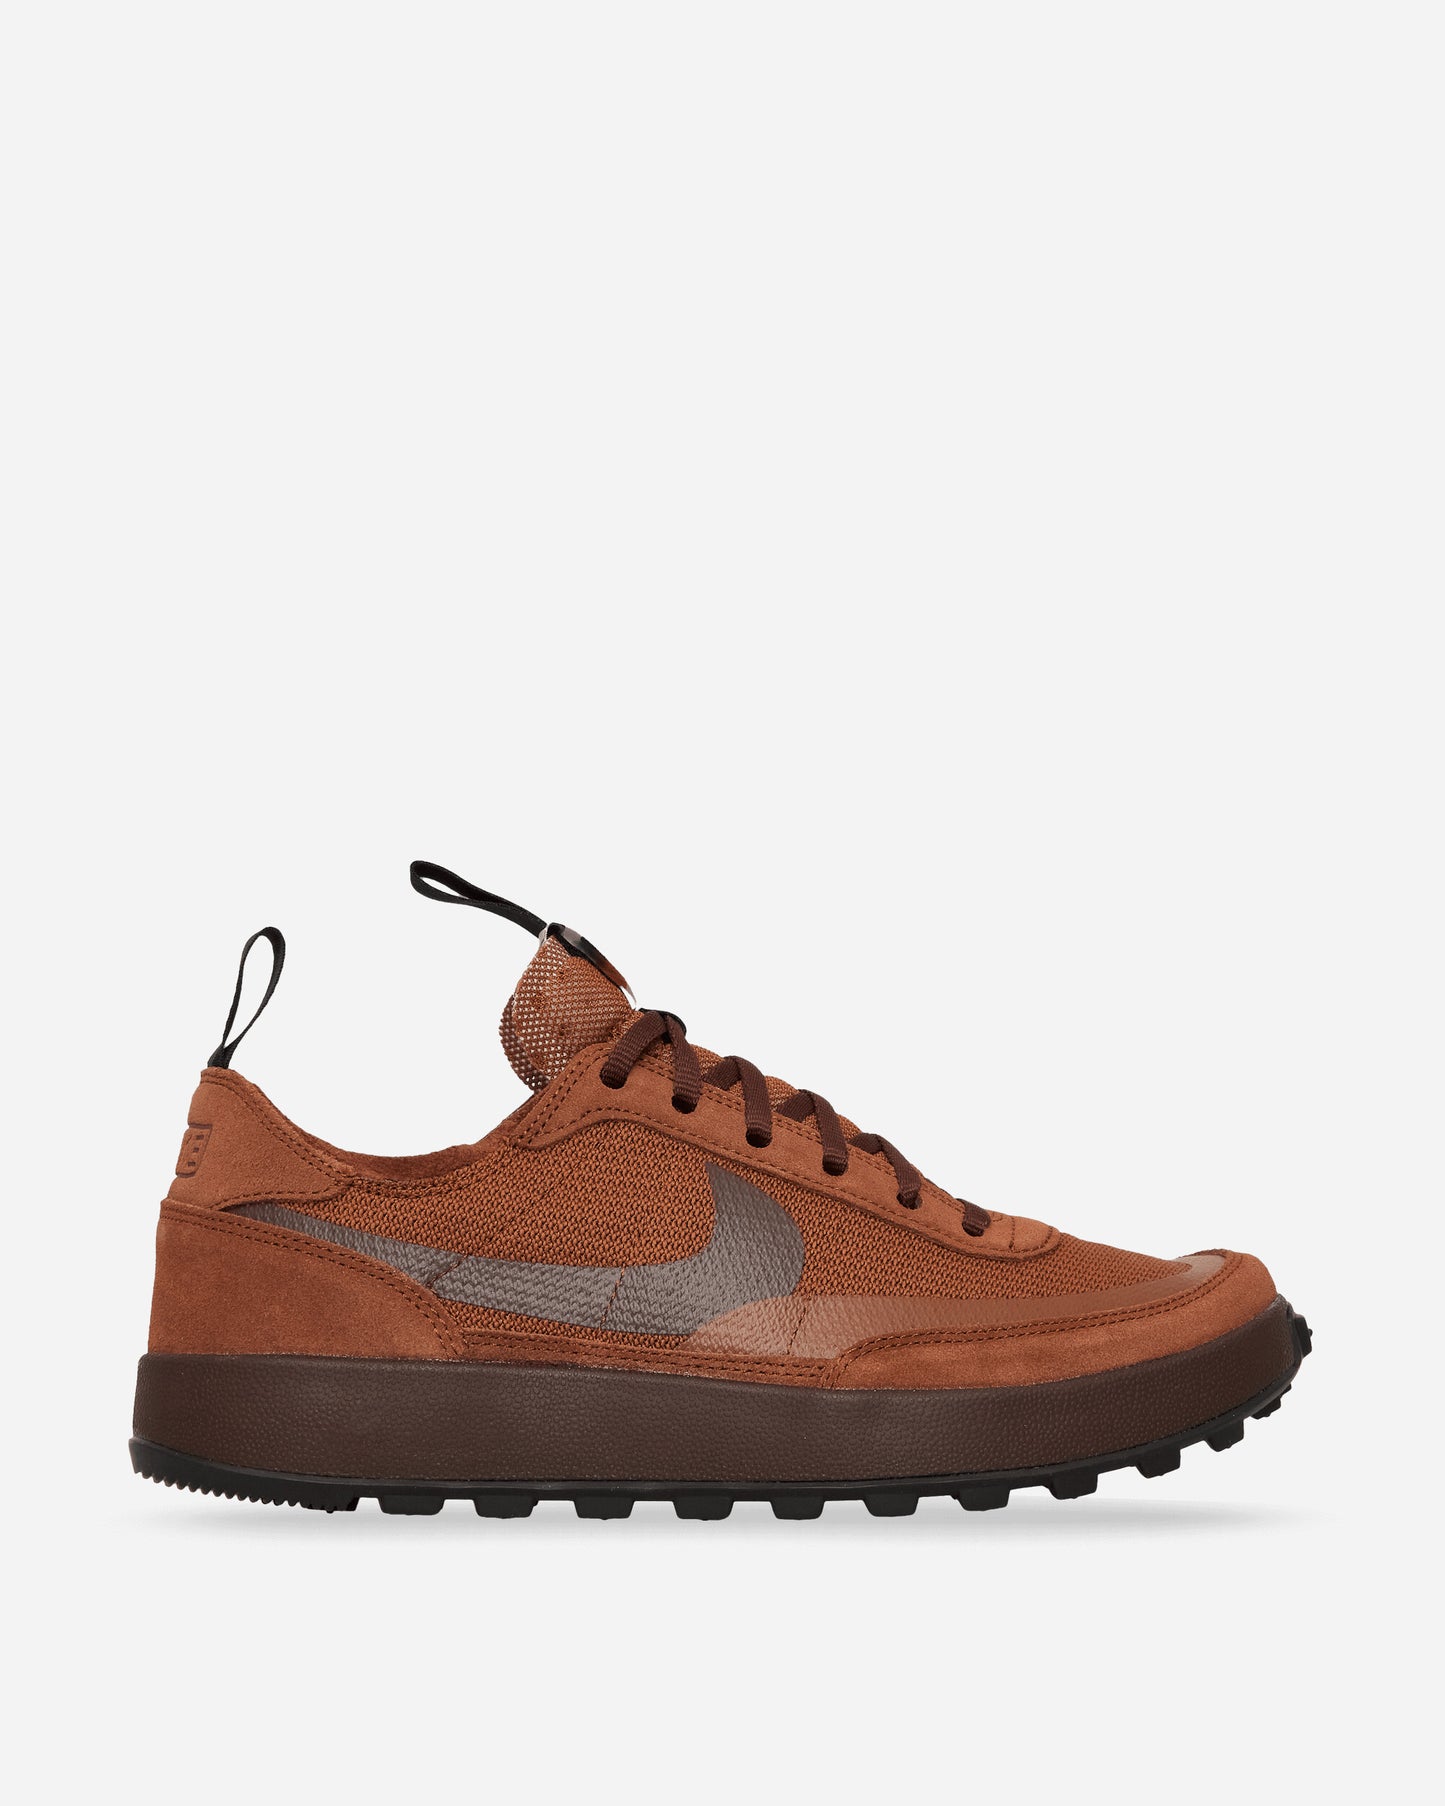 Nike Wmns General Purpose Shoe Pecan/Dk Field Brown Sneakers Low DA6672-201